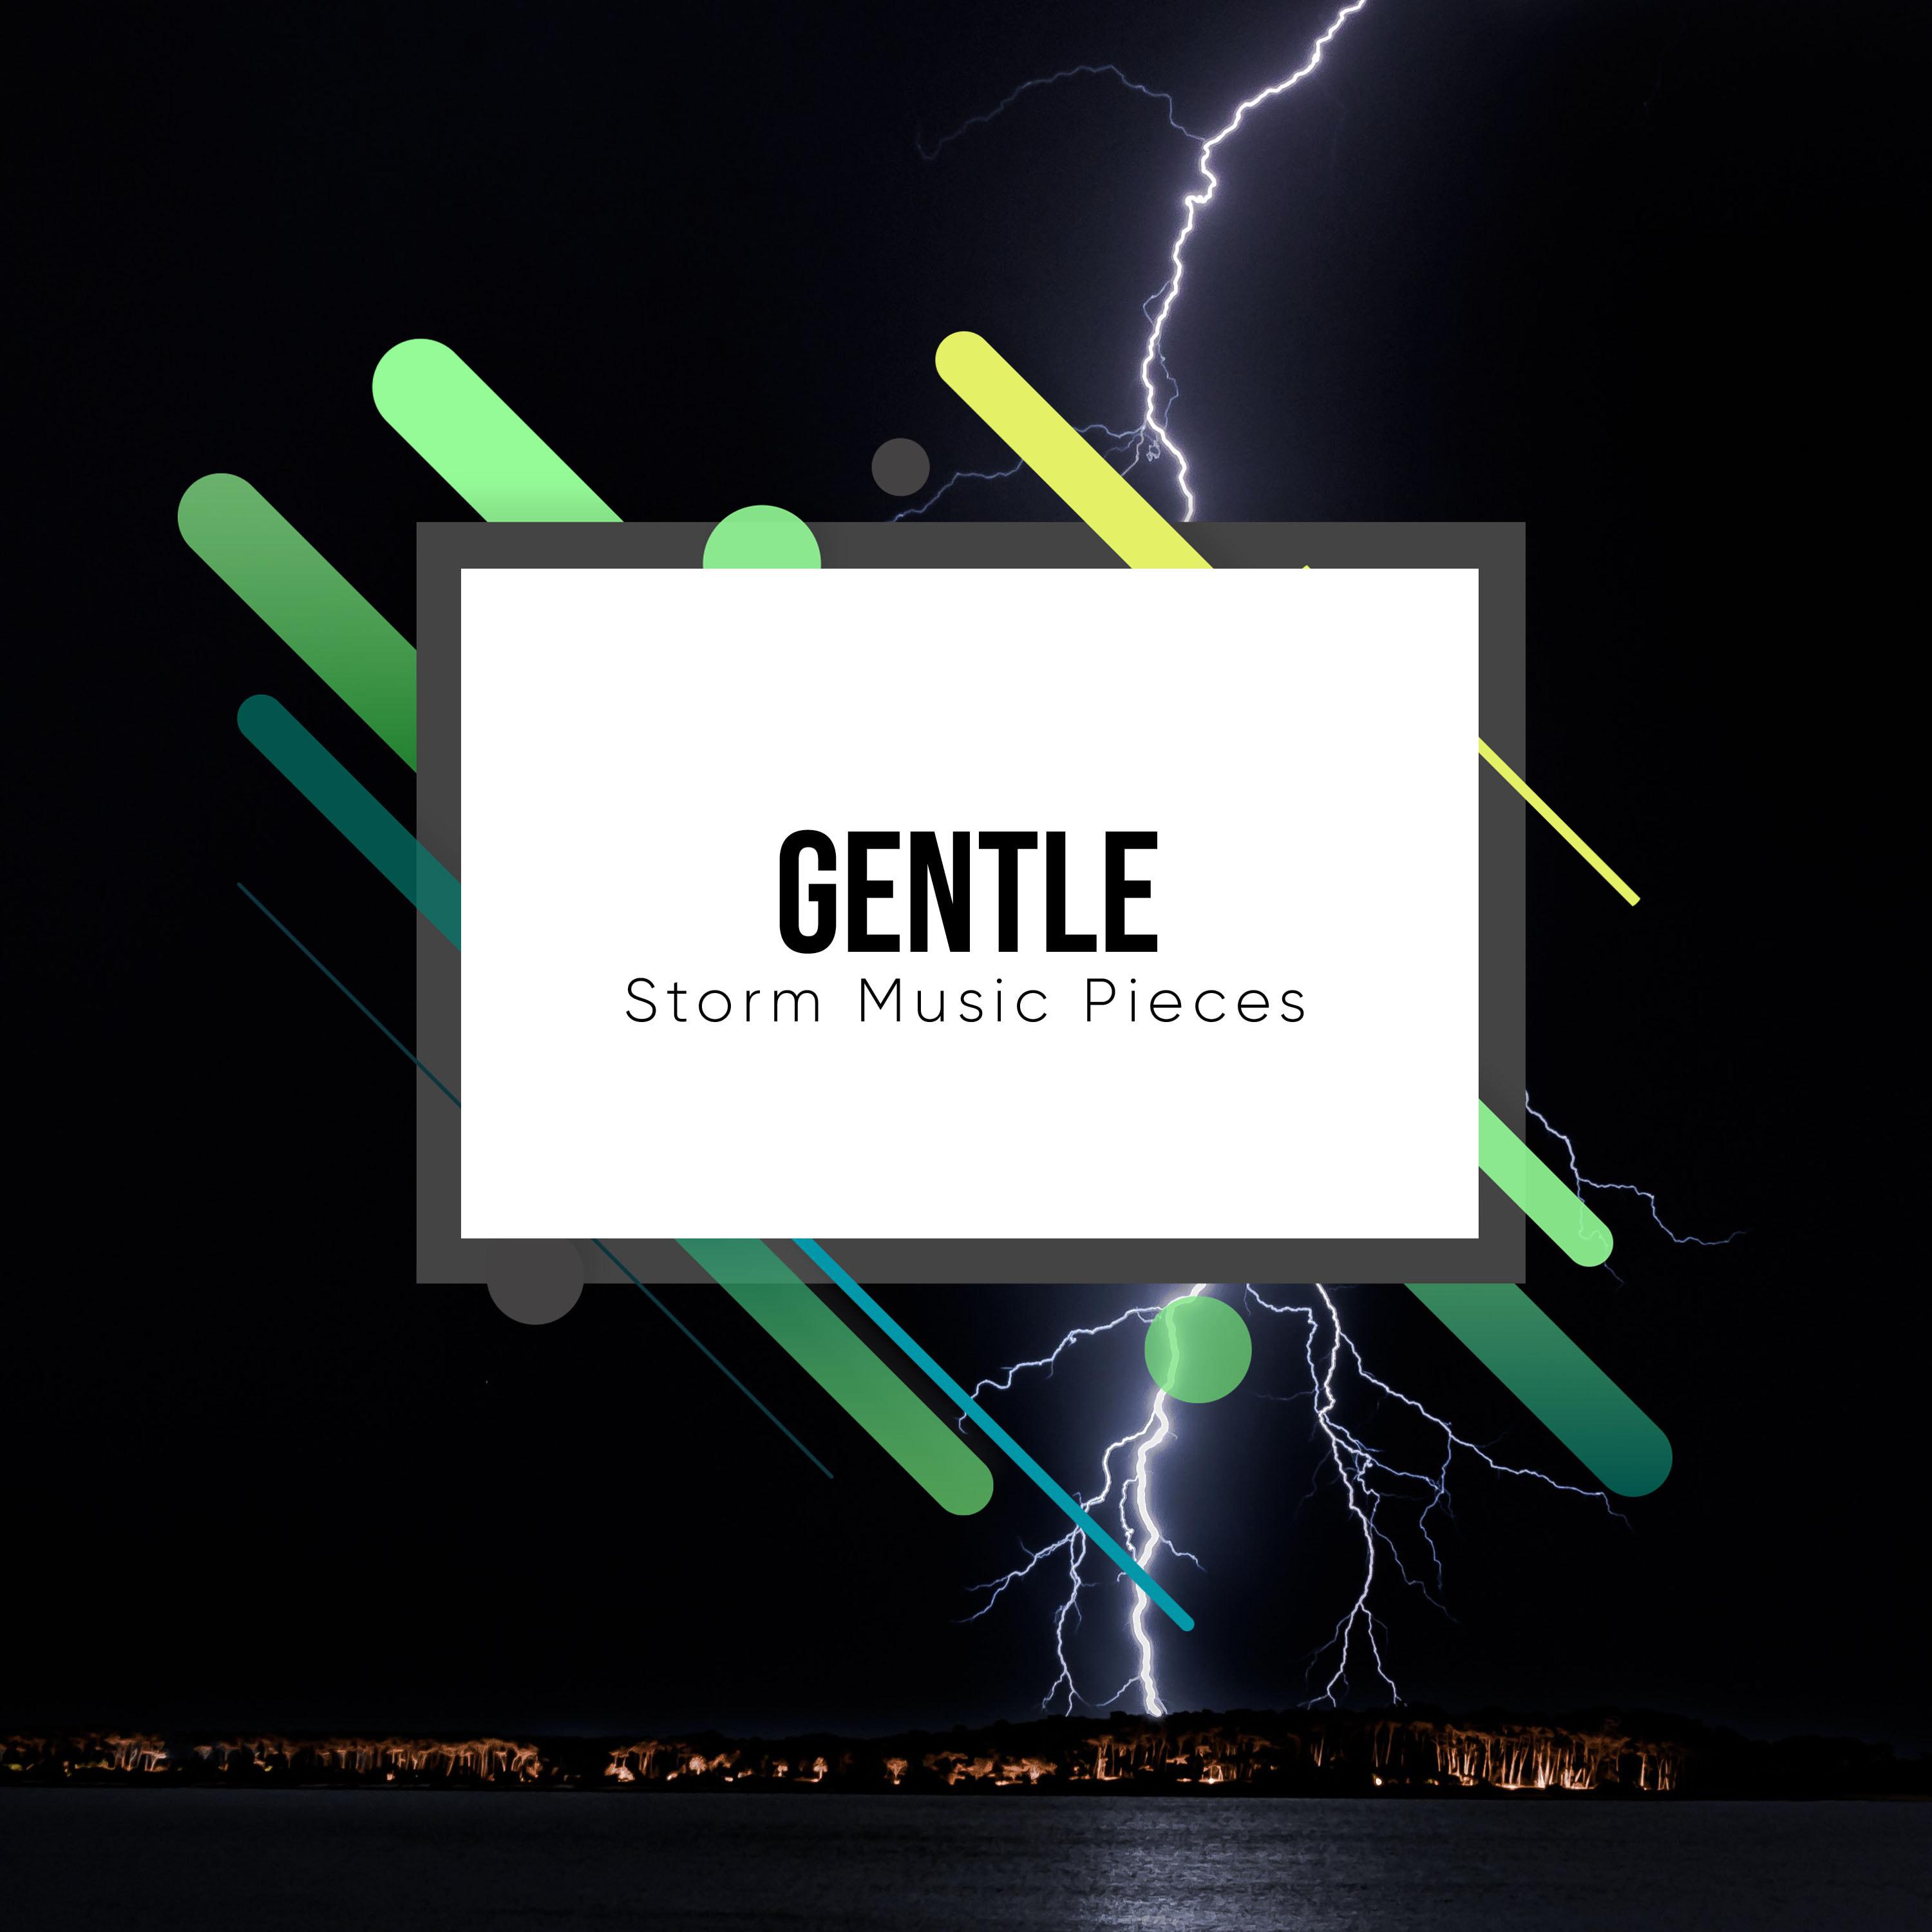 #10 Gentle Storm Music Pieces